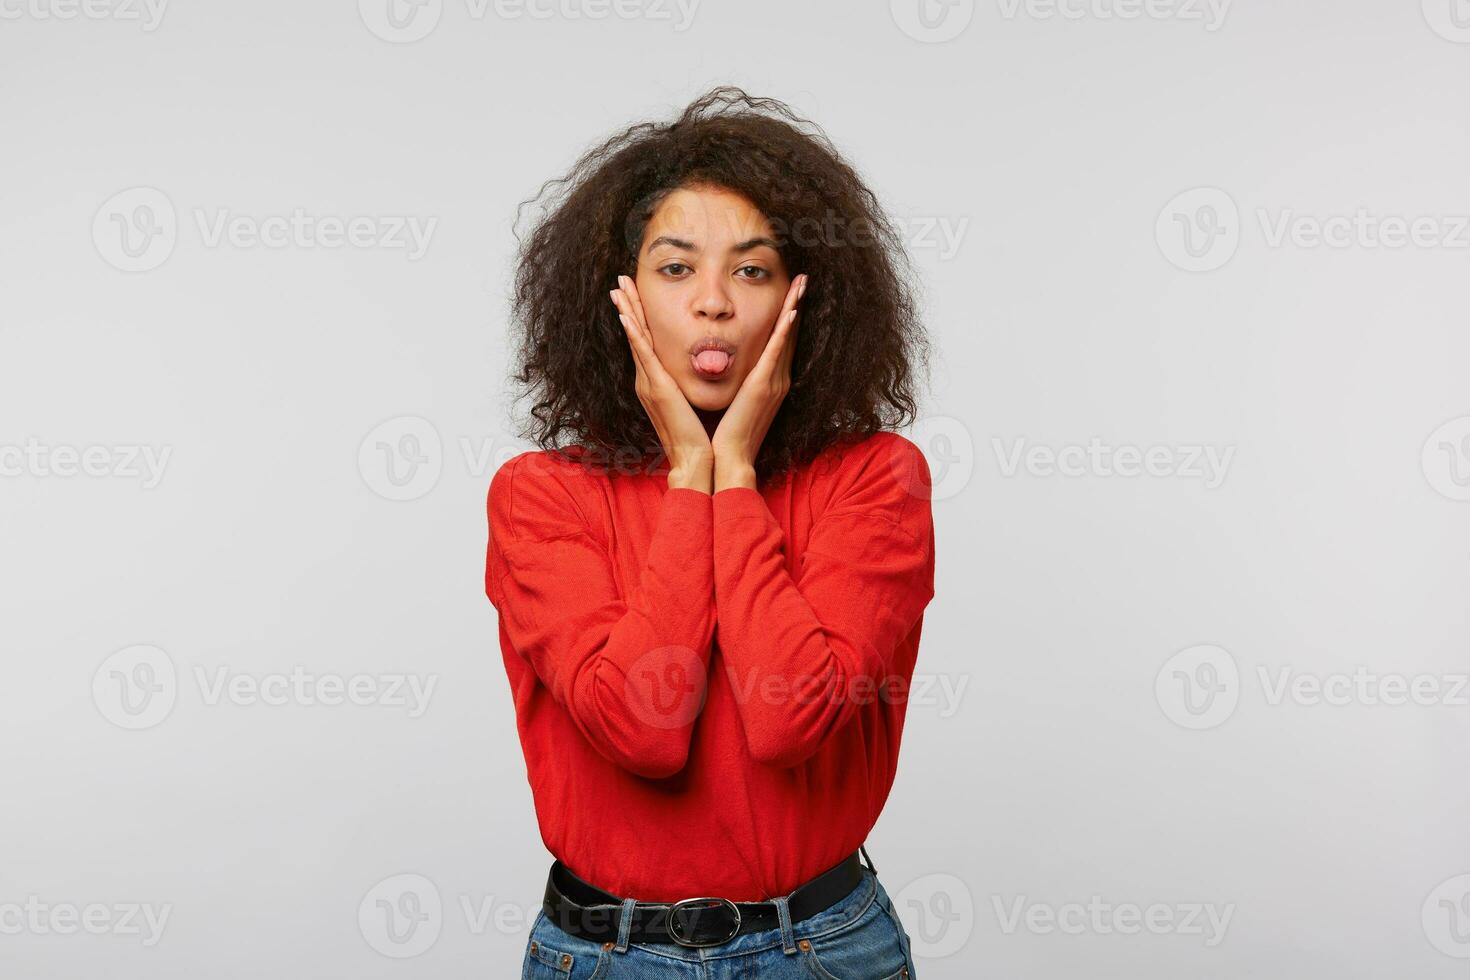 bonito africano americano niña hermosa mujer, joven, linda en rojo manga larga con largo afro peinado muestra lengua conmovedor cara con palmas en blanco antecedentes foto